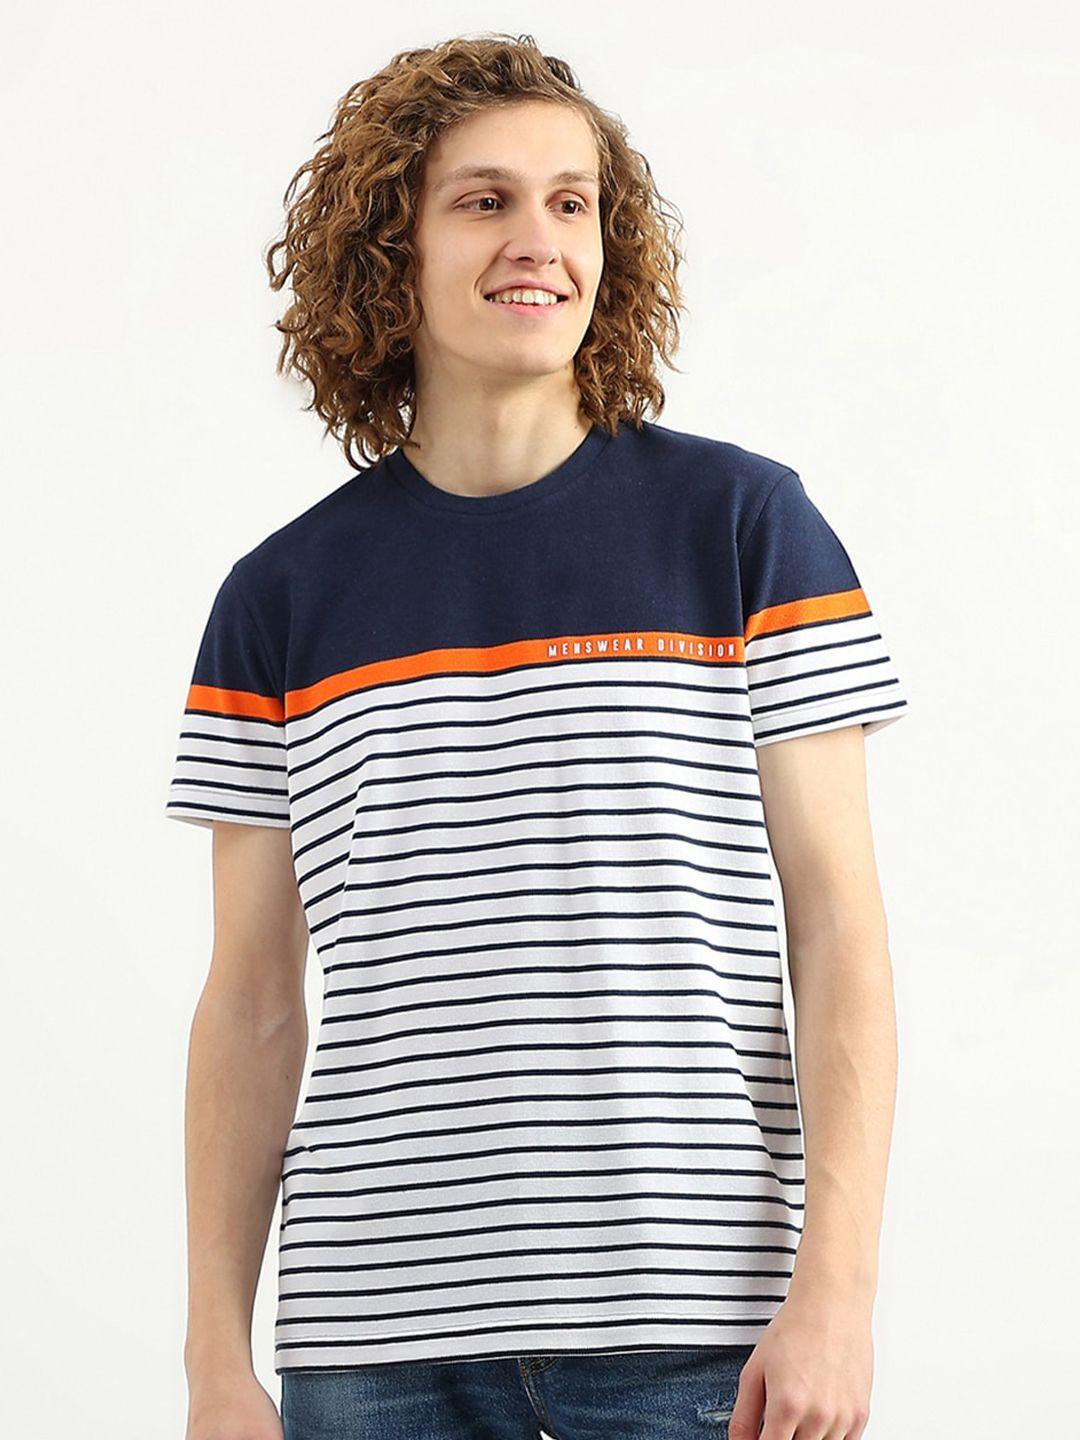 united-colors-of-benetton-men-striped-cotton-t-shirt